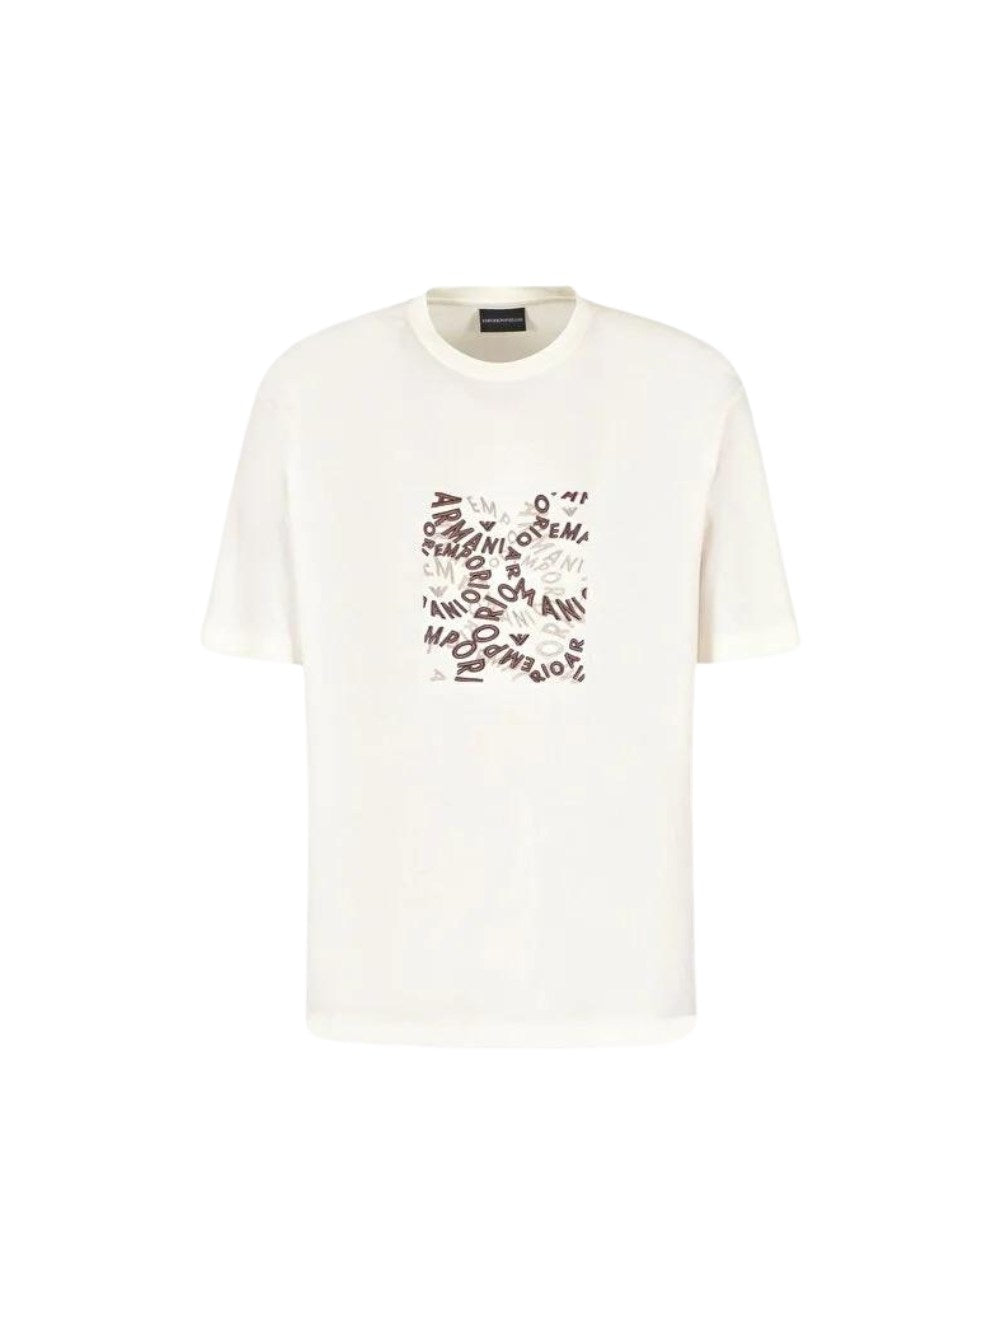 T-Shirt   Emporio Armani